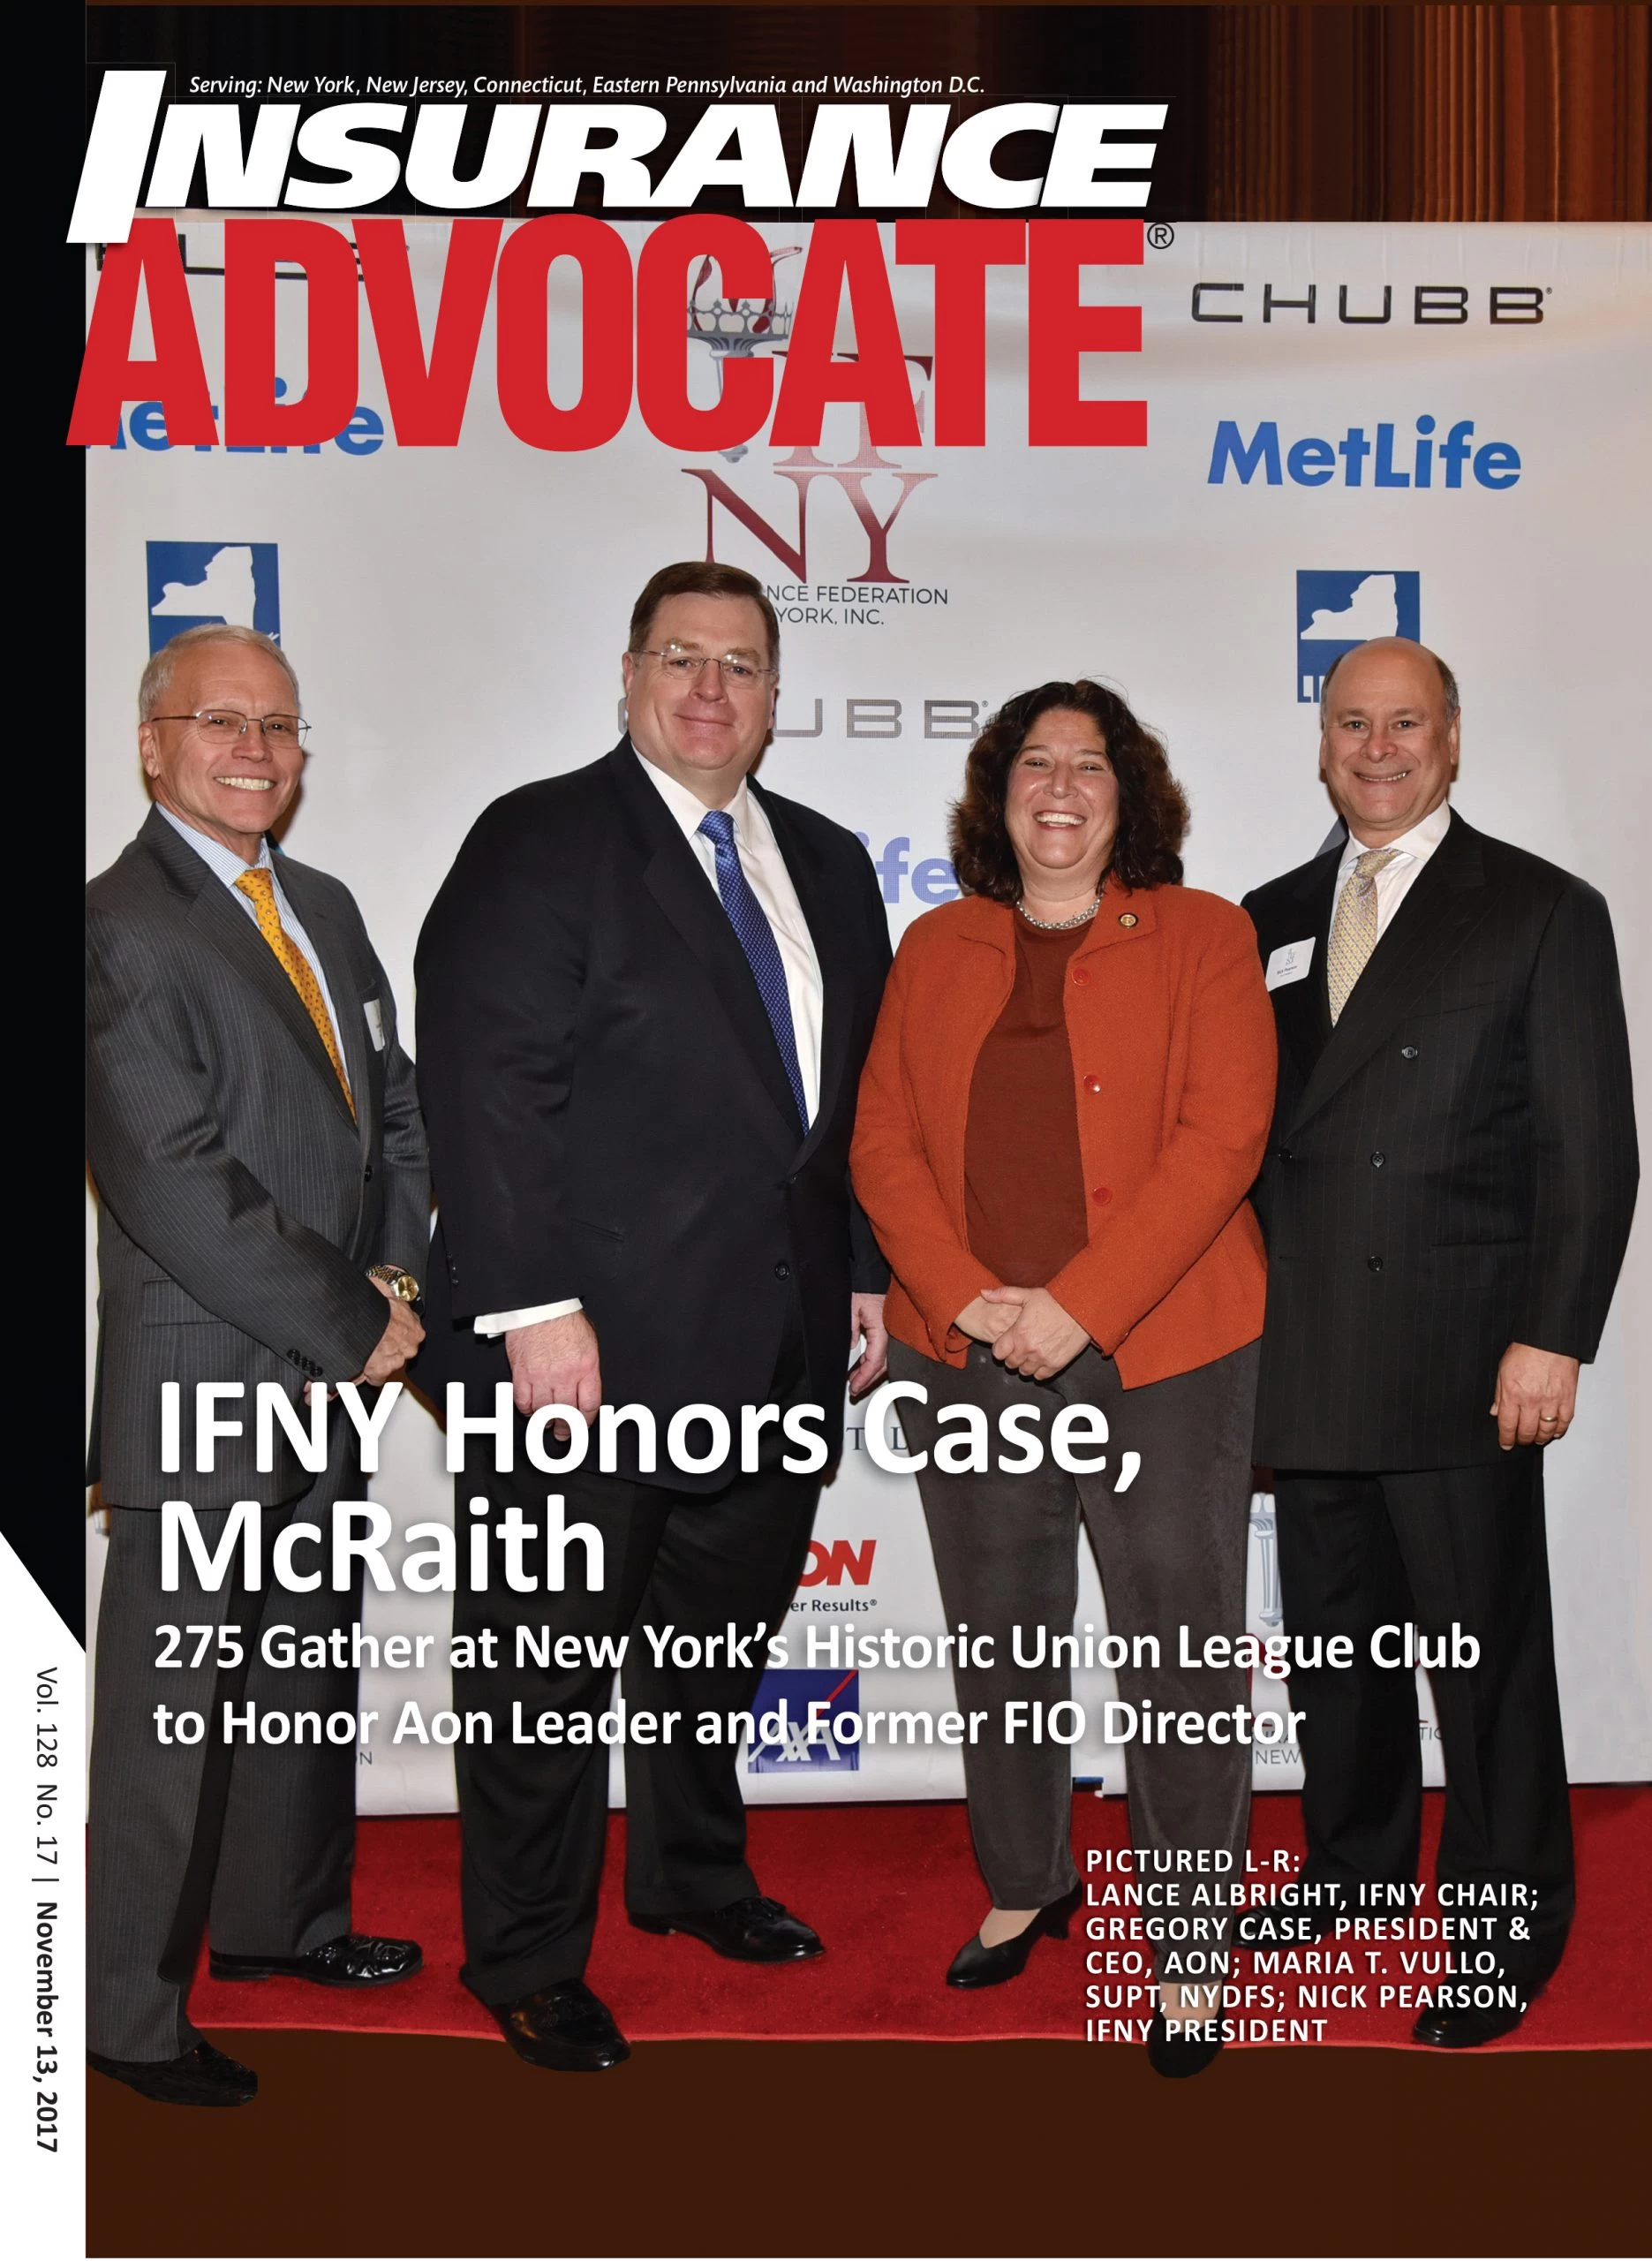 The Magazine Insurance Advocate